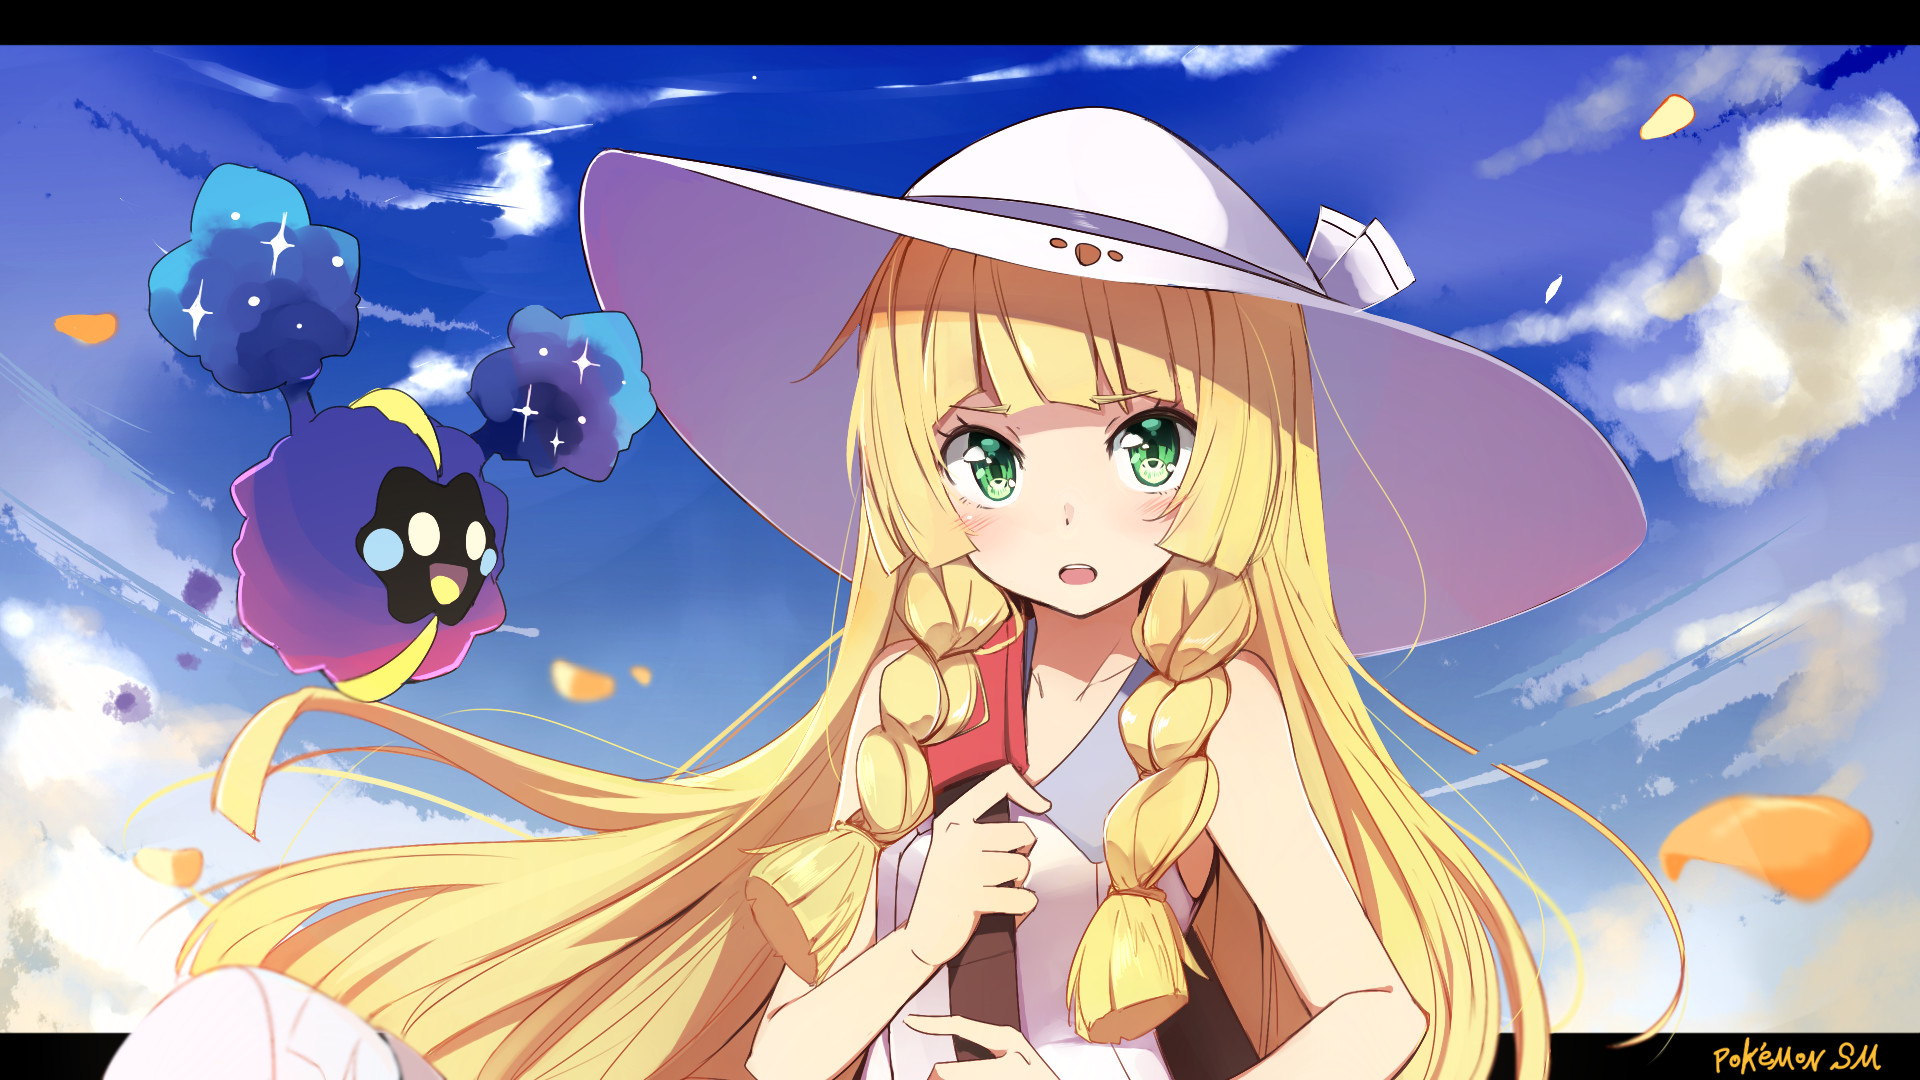 pokemon sun and moon wallpaper,cartoon,anime,cg artwork,sky,long hair